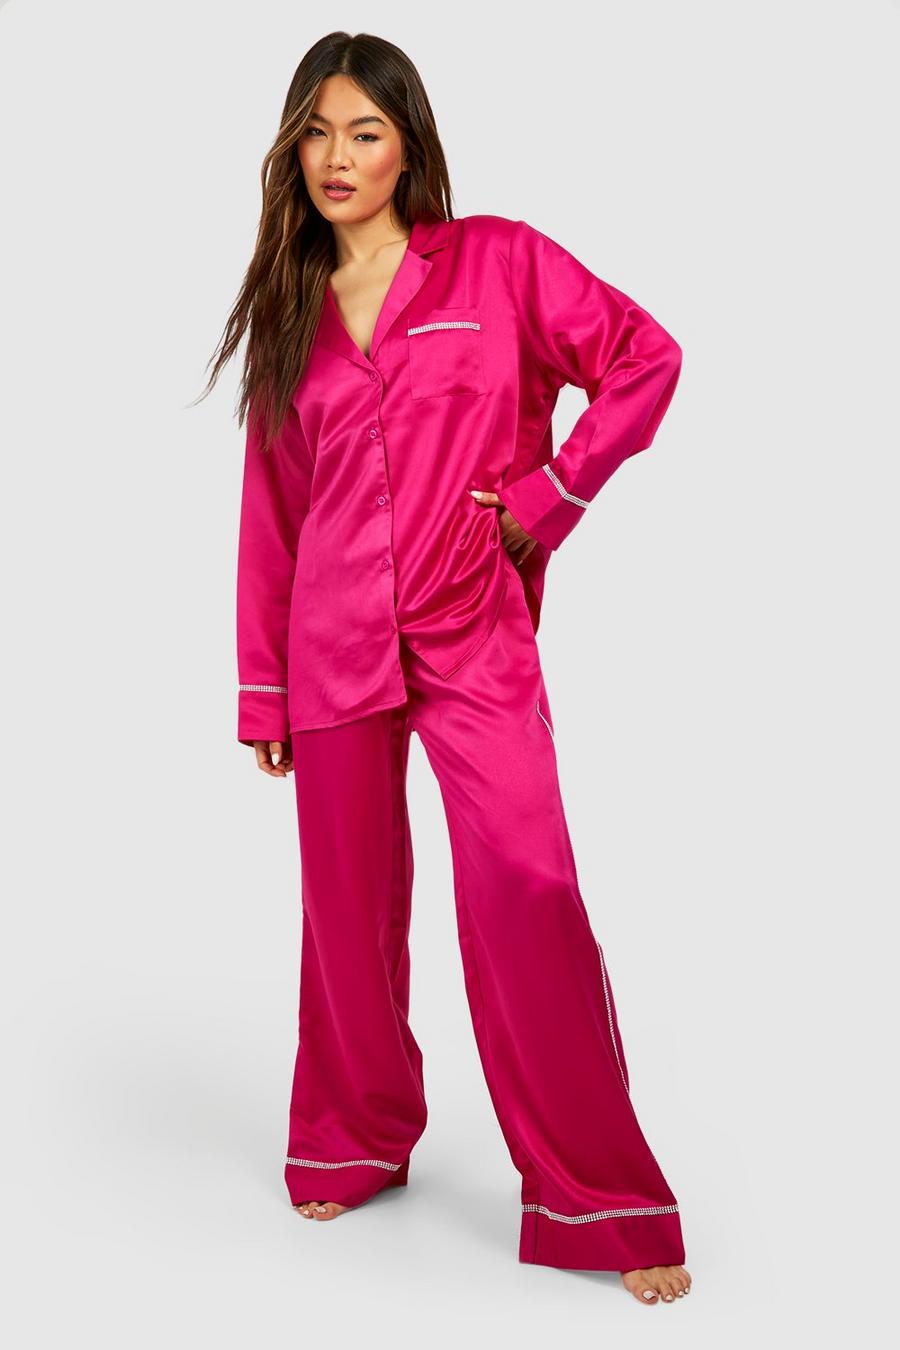 Hot pink Premium Rhinestone Edge Detail Shirt And Pants Set